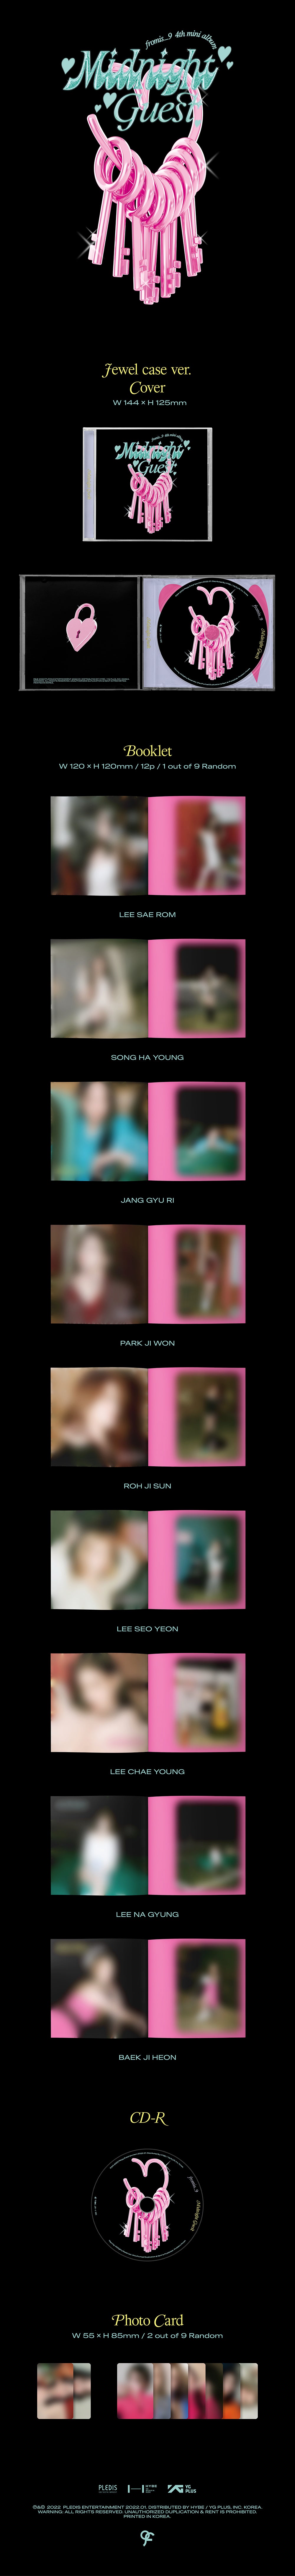 Fromis 9 – Midnight Guest (4. Mini-Album) (Jewel Case Ver.)